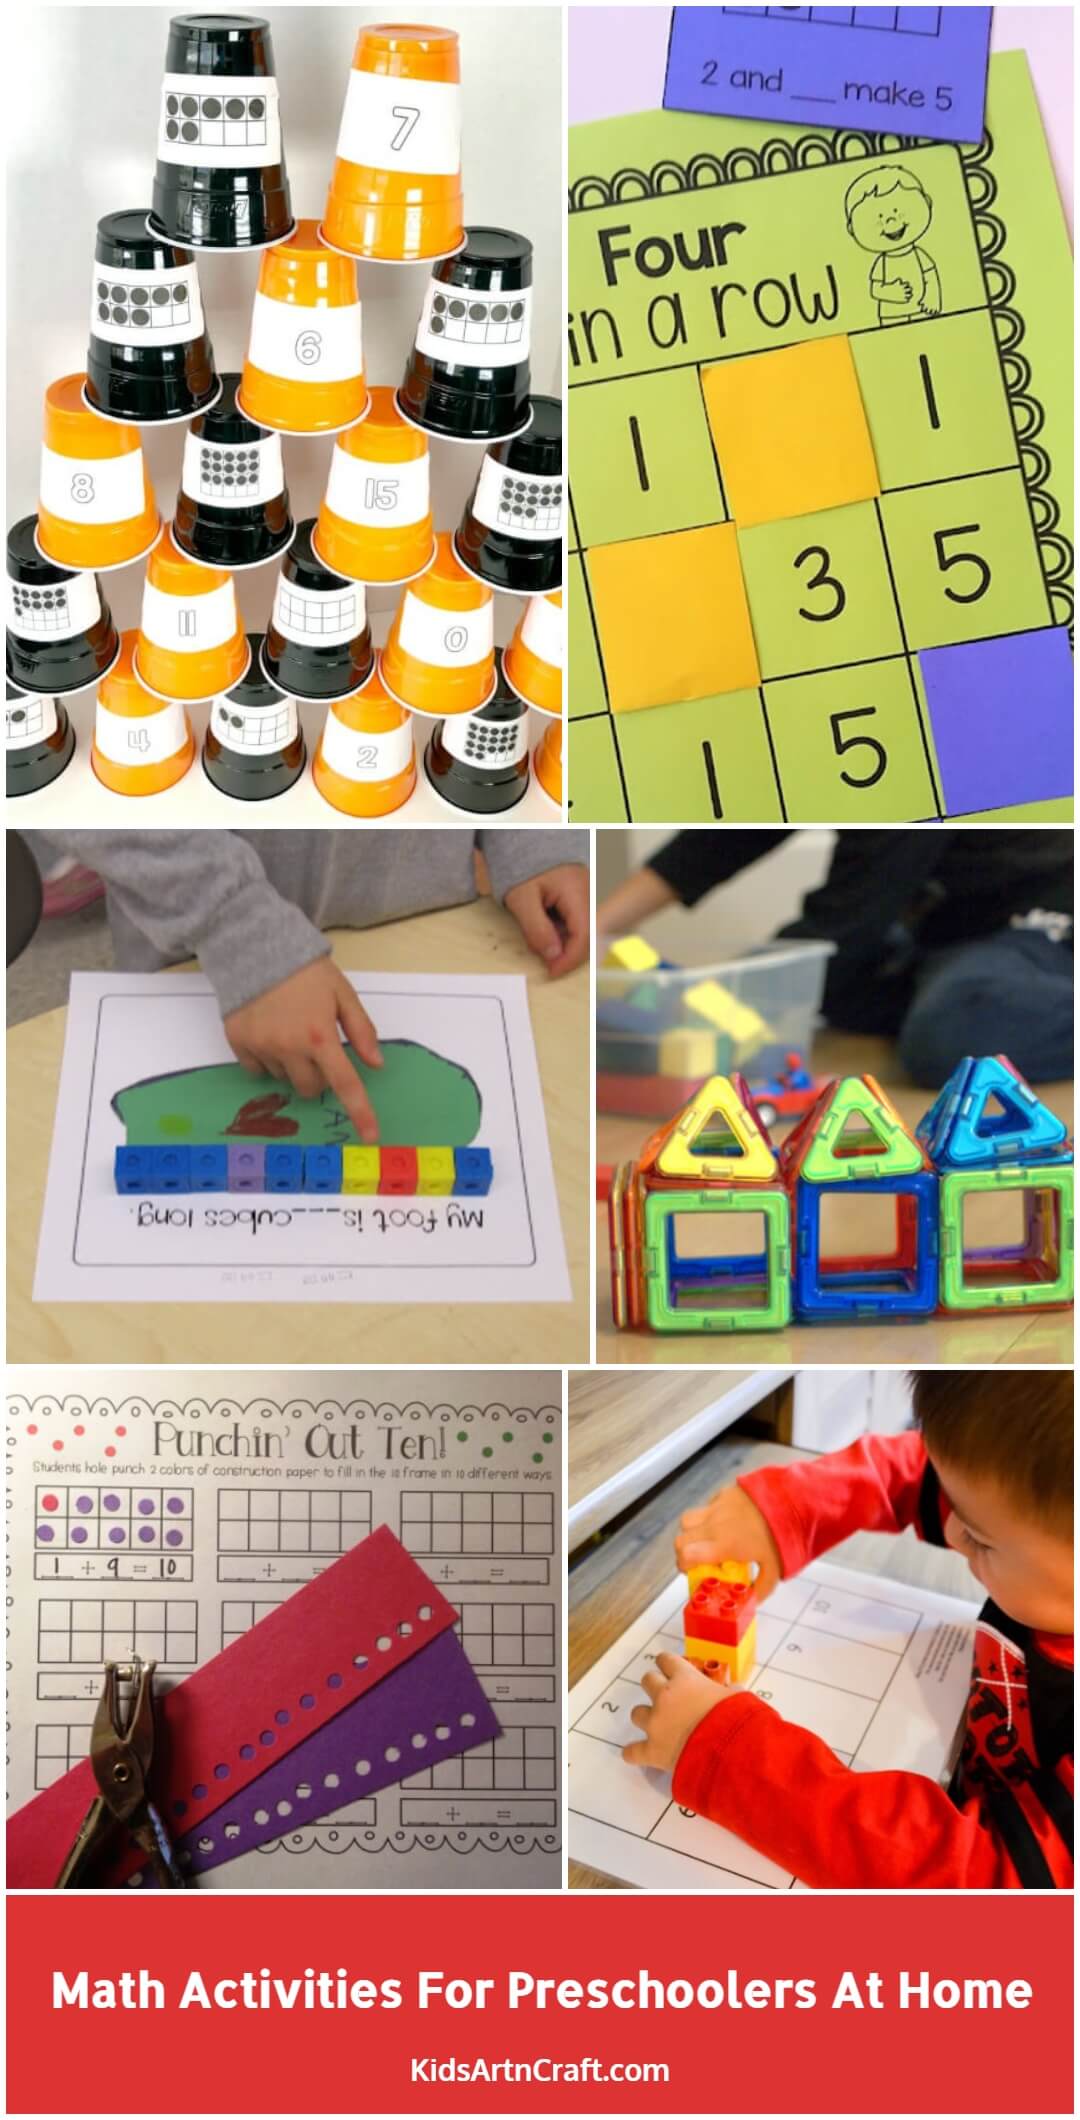 Math Activities for Preschoolers at Home